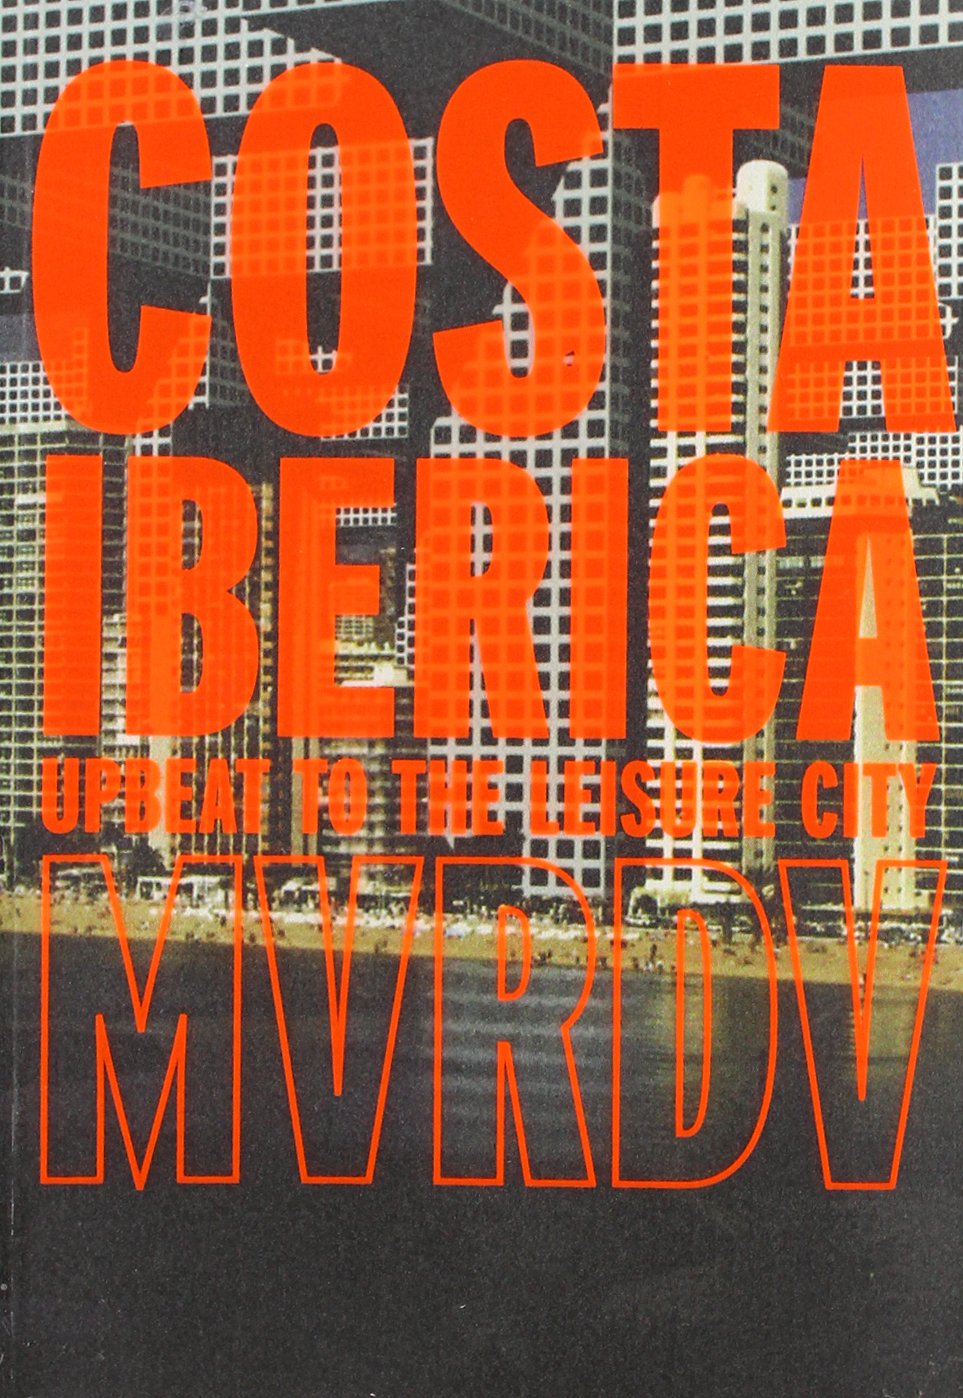 Imagen de portada del libro Costa Iberica